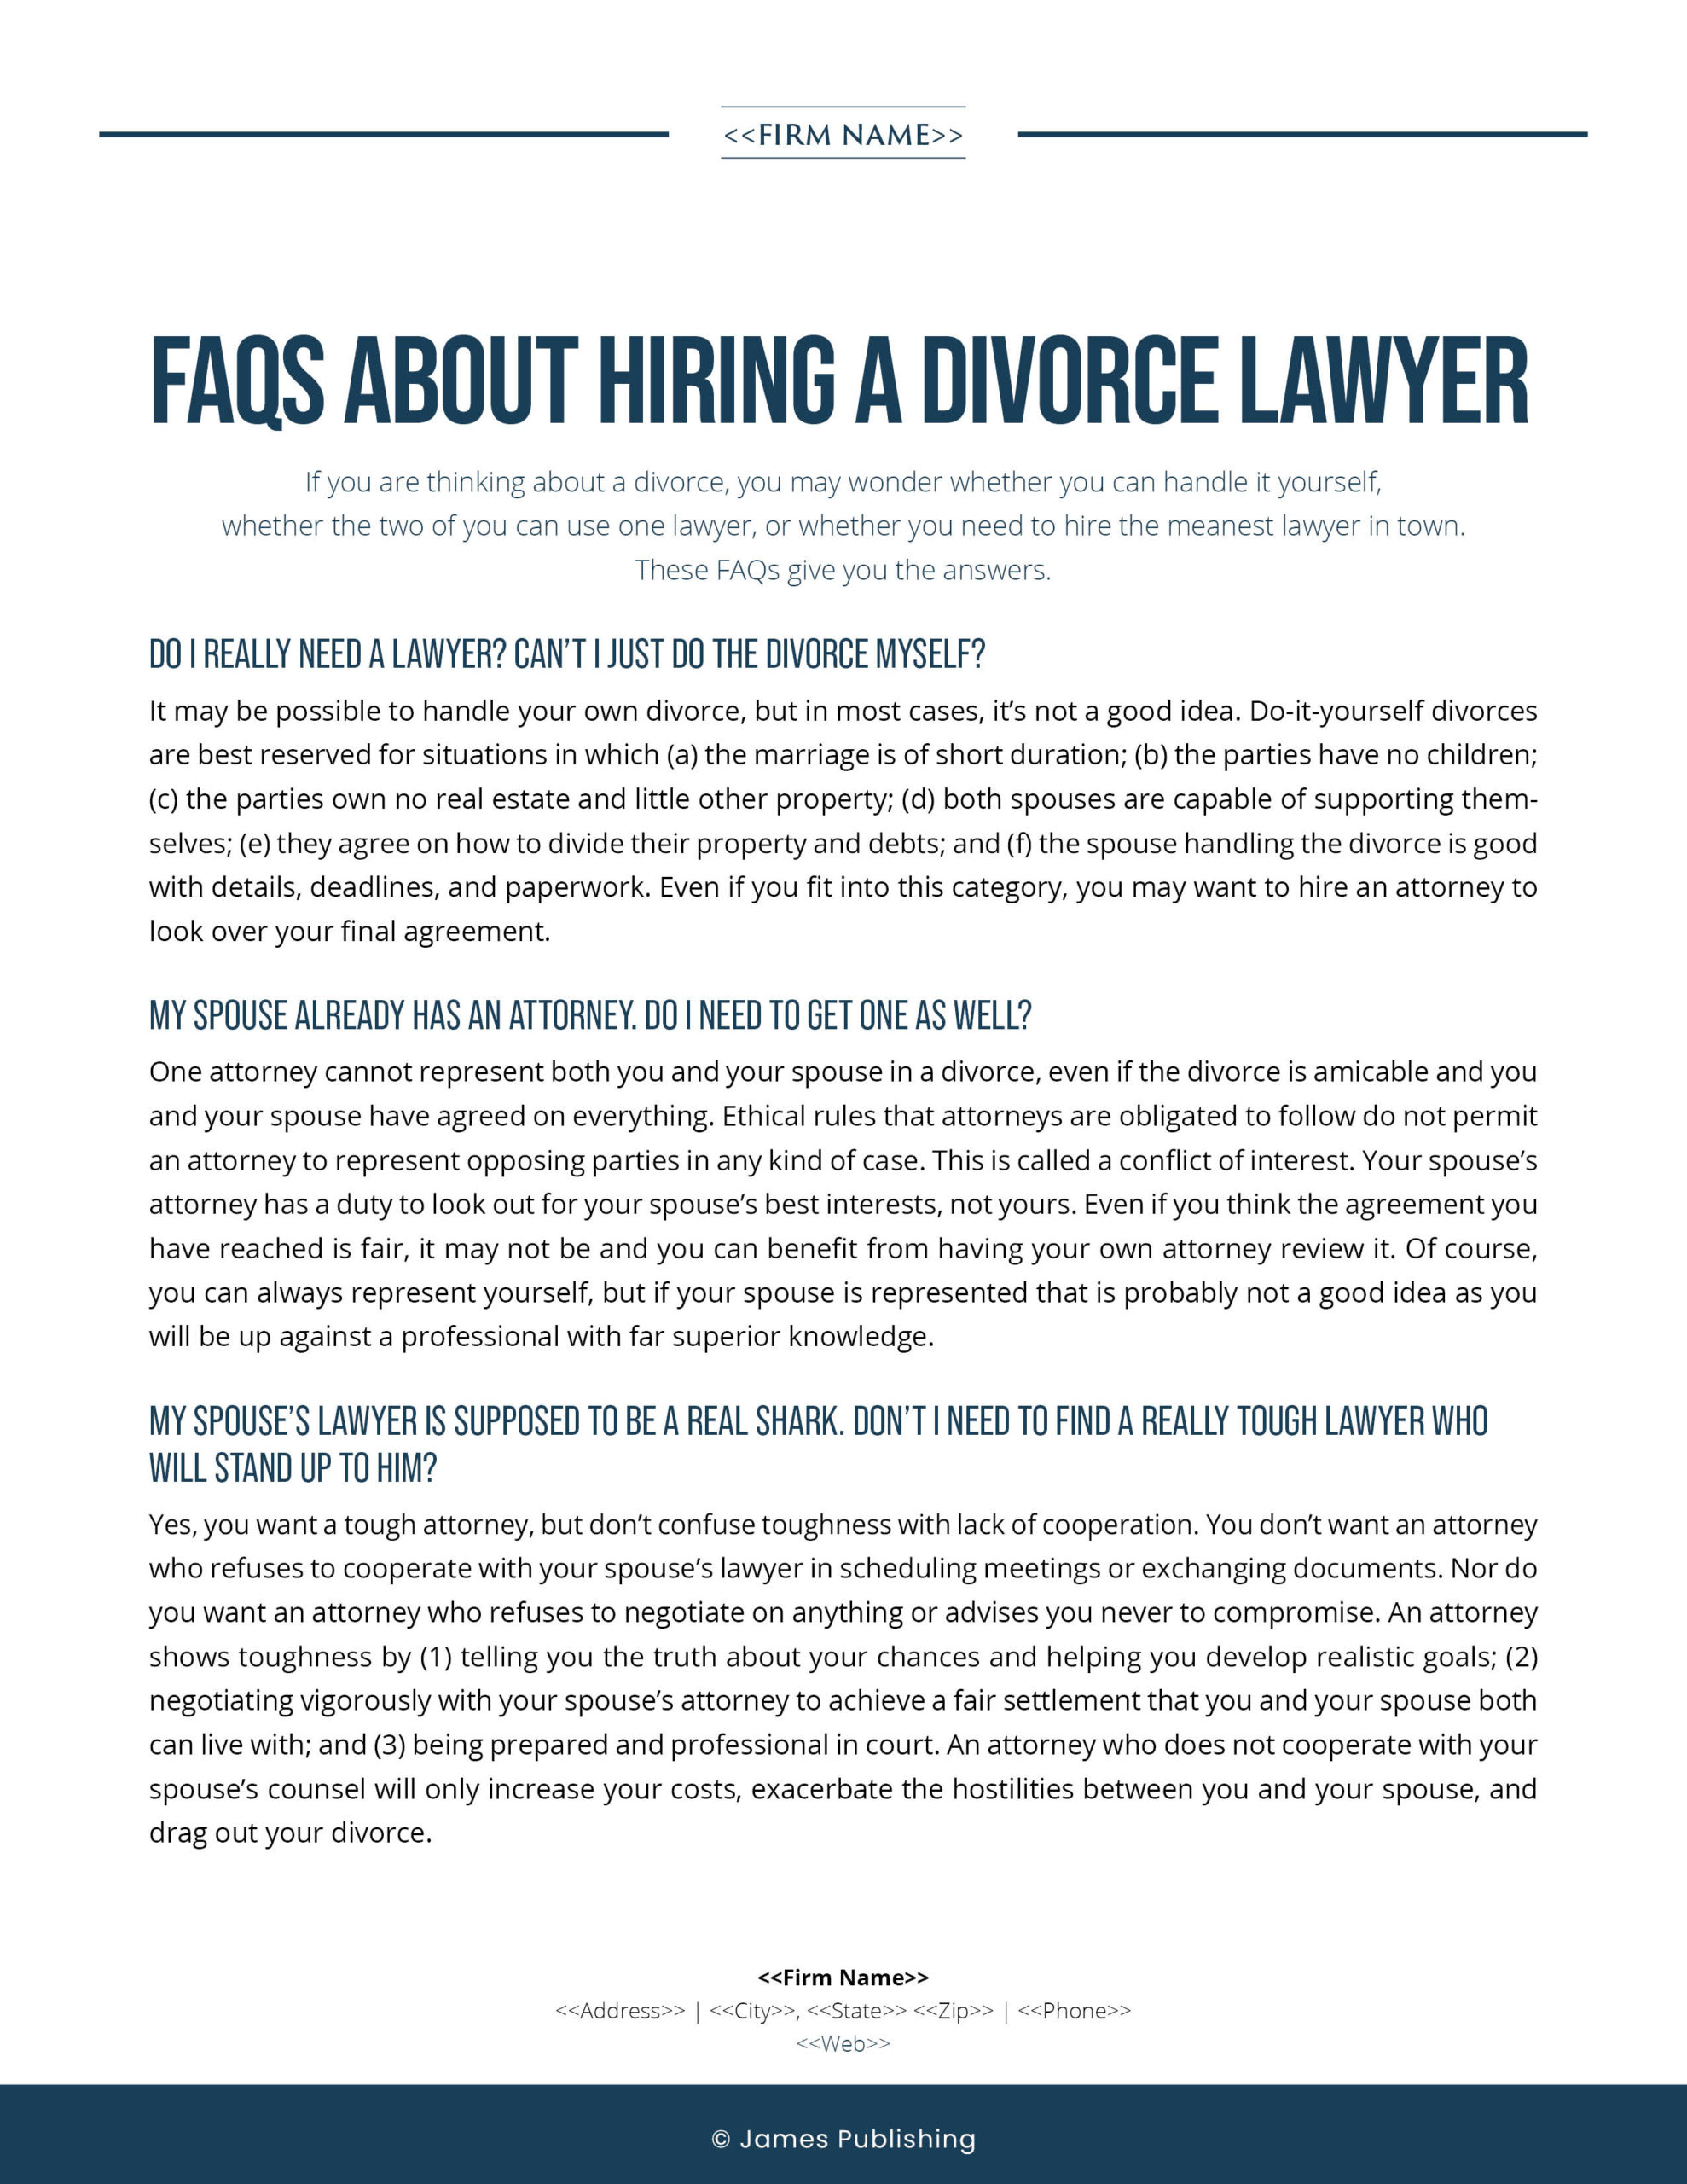 FAM-12 FAQs About Hiring a Divorce Lawyer